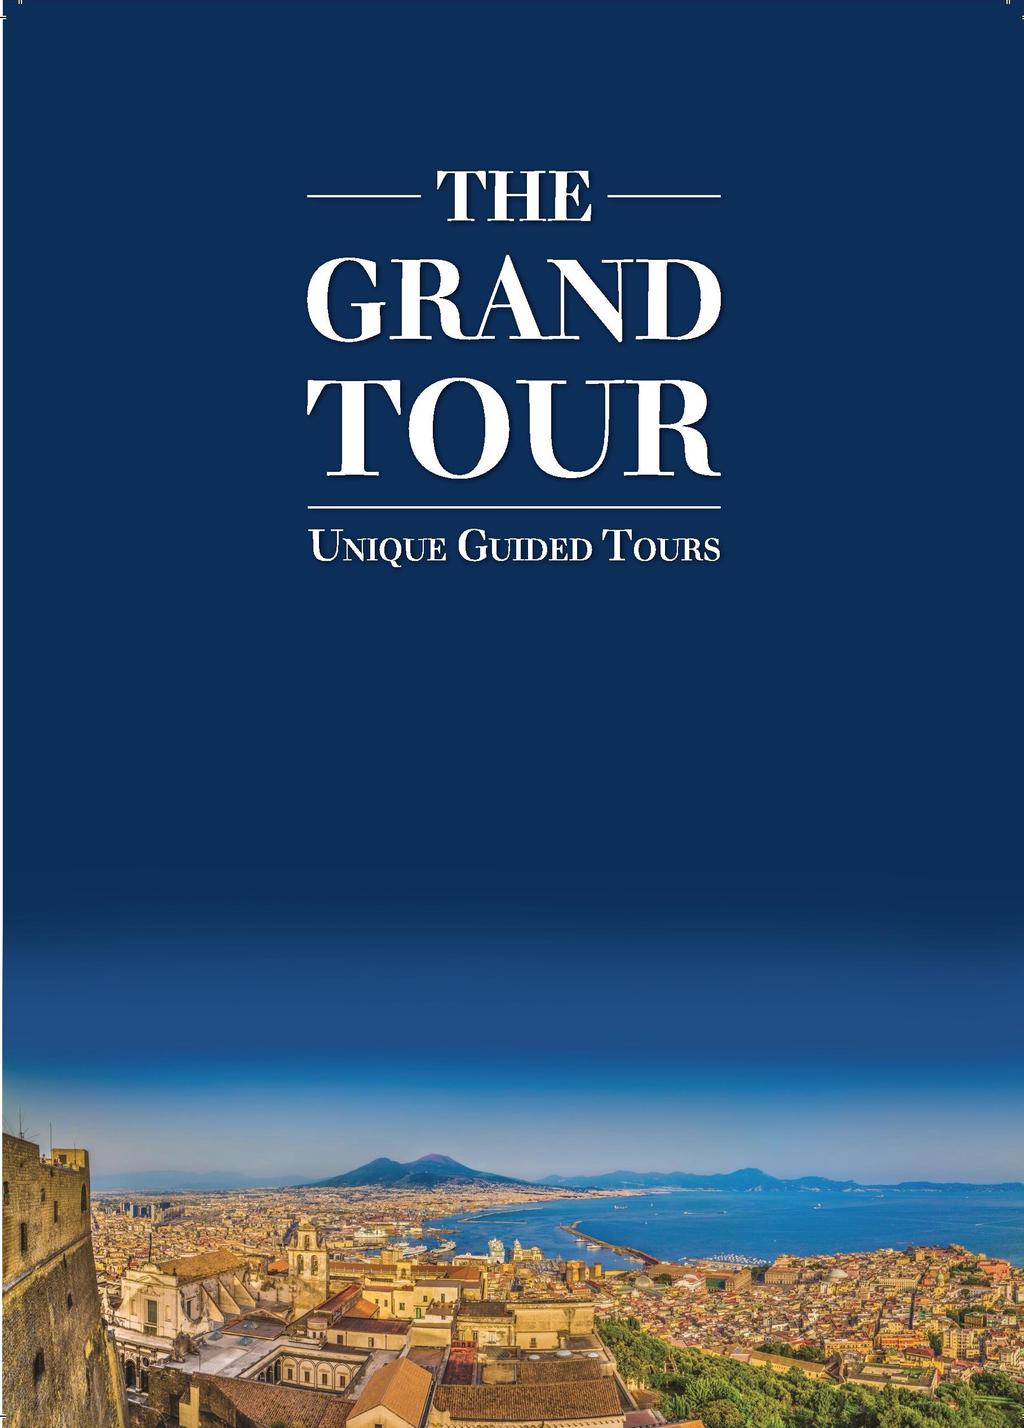 Grand Tour of Sicily Palermo, Agrigento, Taormina Eight